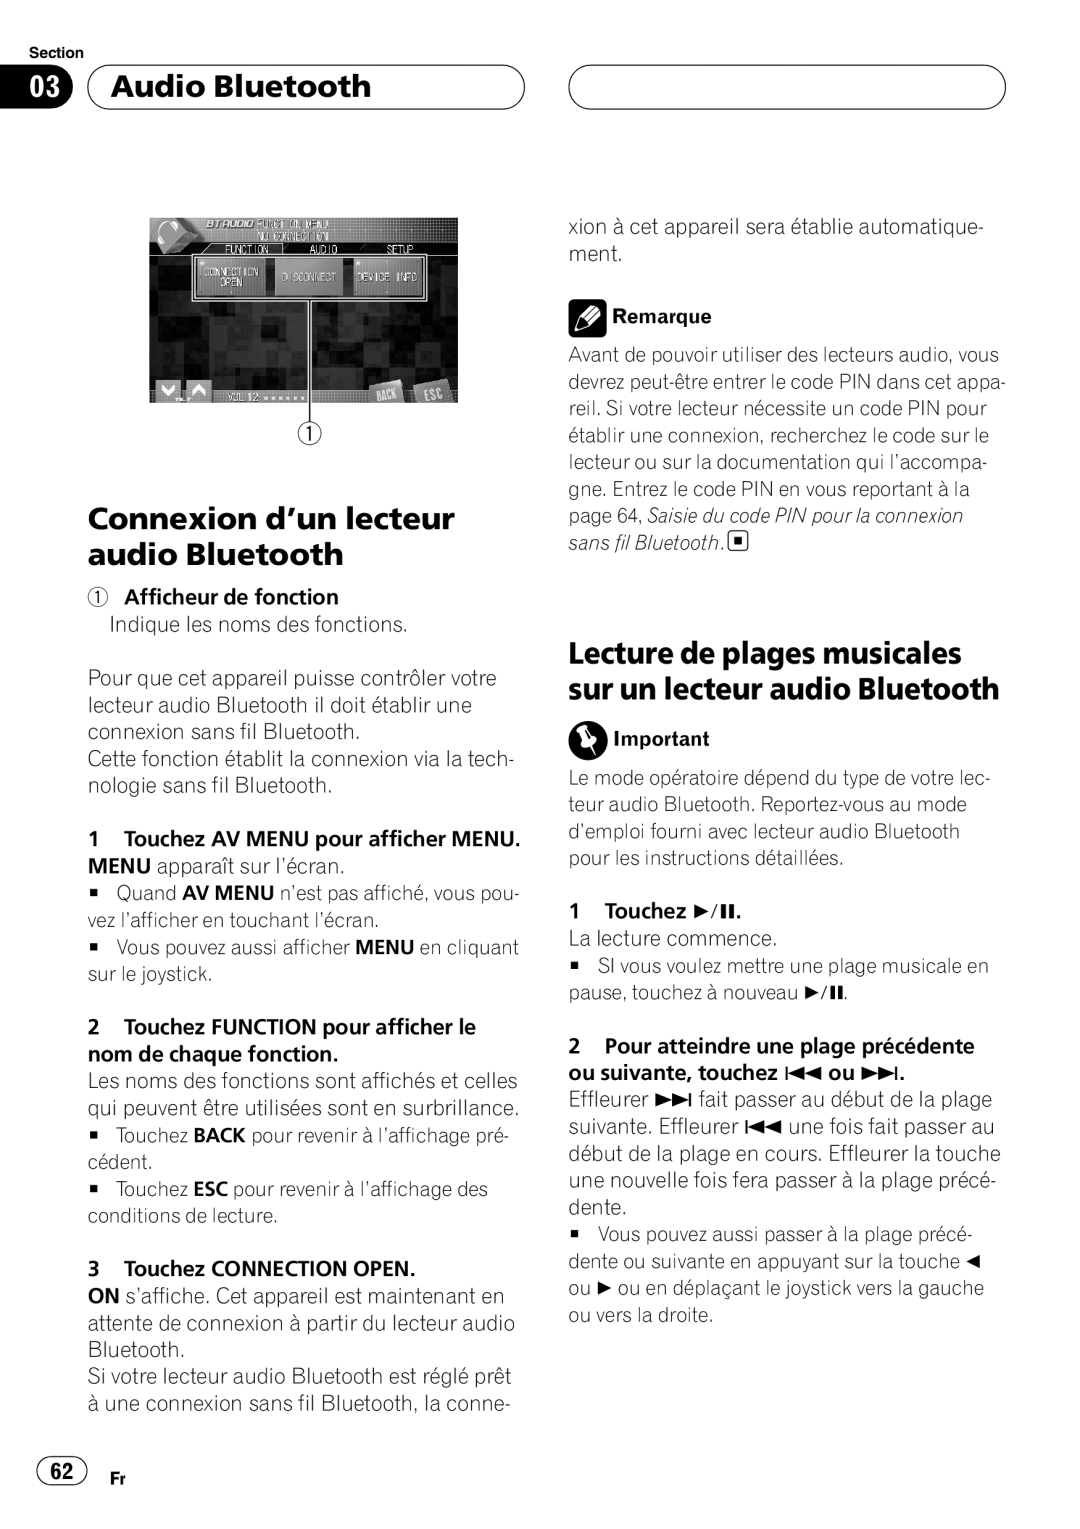 Pioneer CD-BTB200 owner manual Audio Bluetooth, Connexion d’un lecteur audio Bluetooth, 62 Fr 